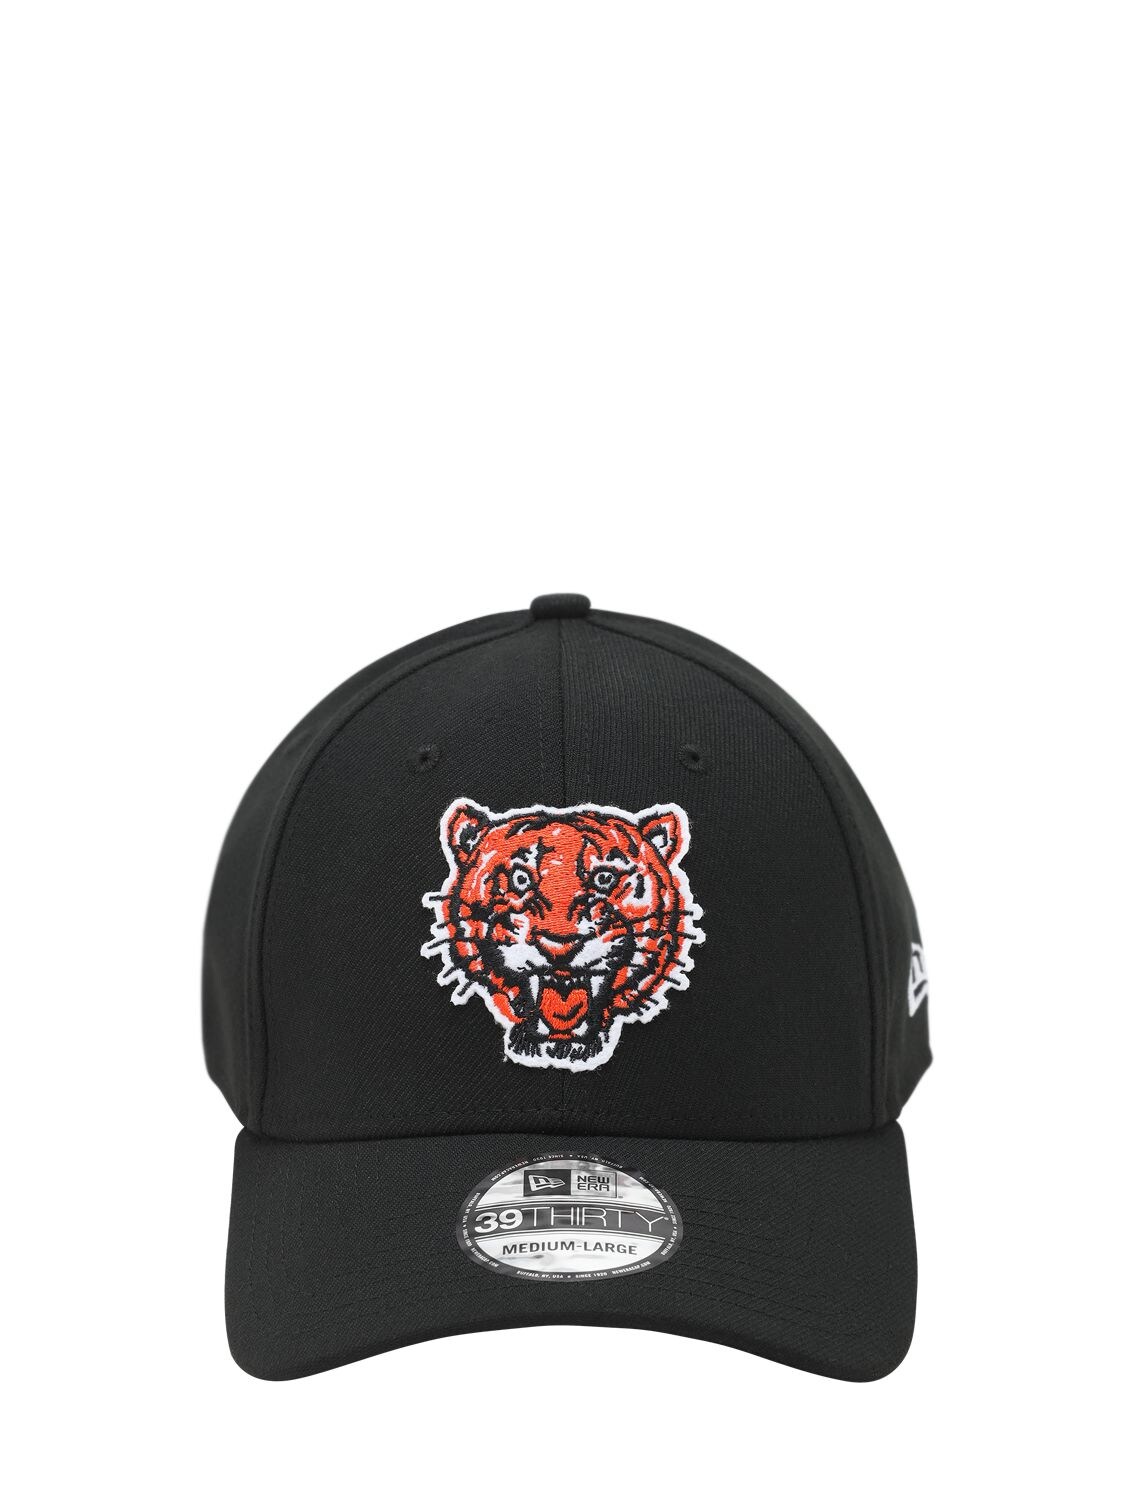 New Era Heritage 39thirty Detroit Tigers Cap In Black